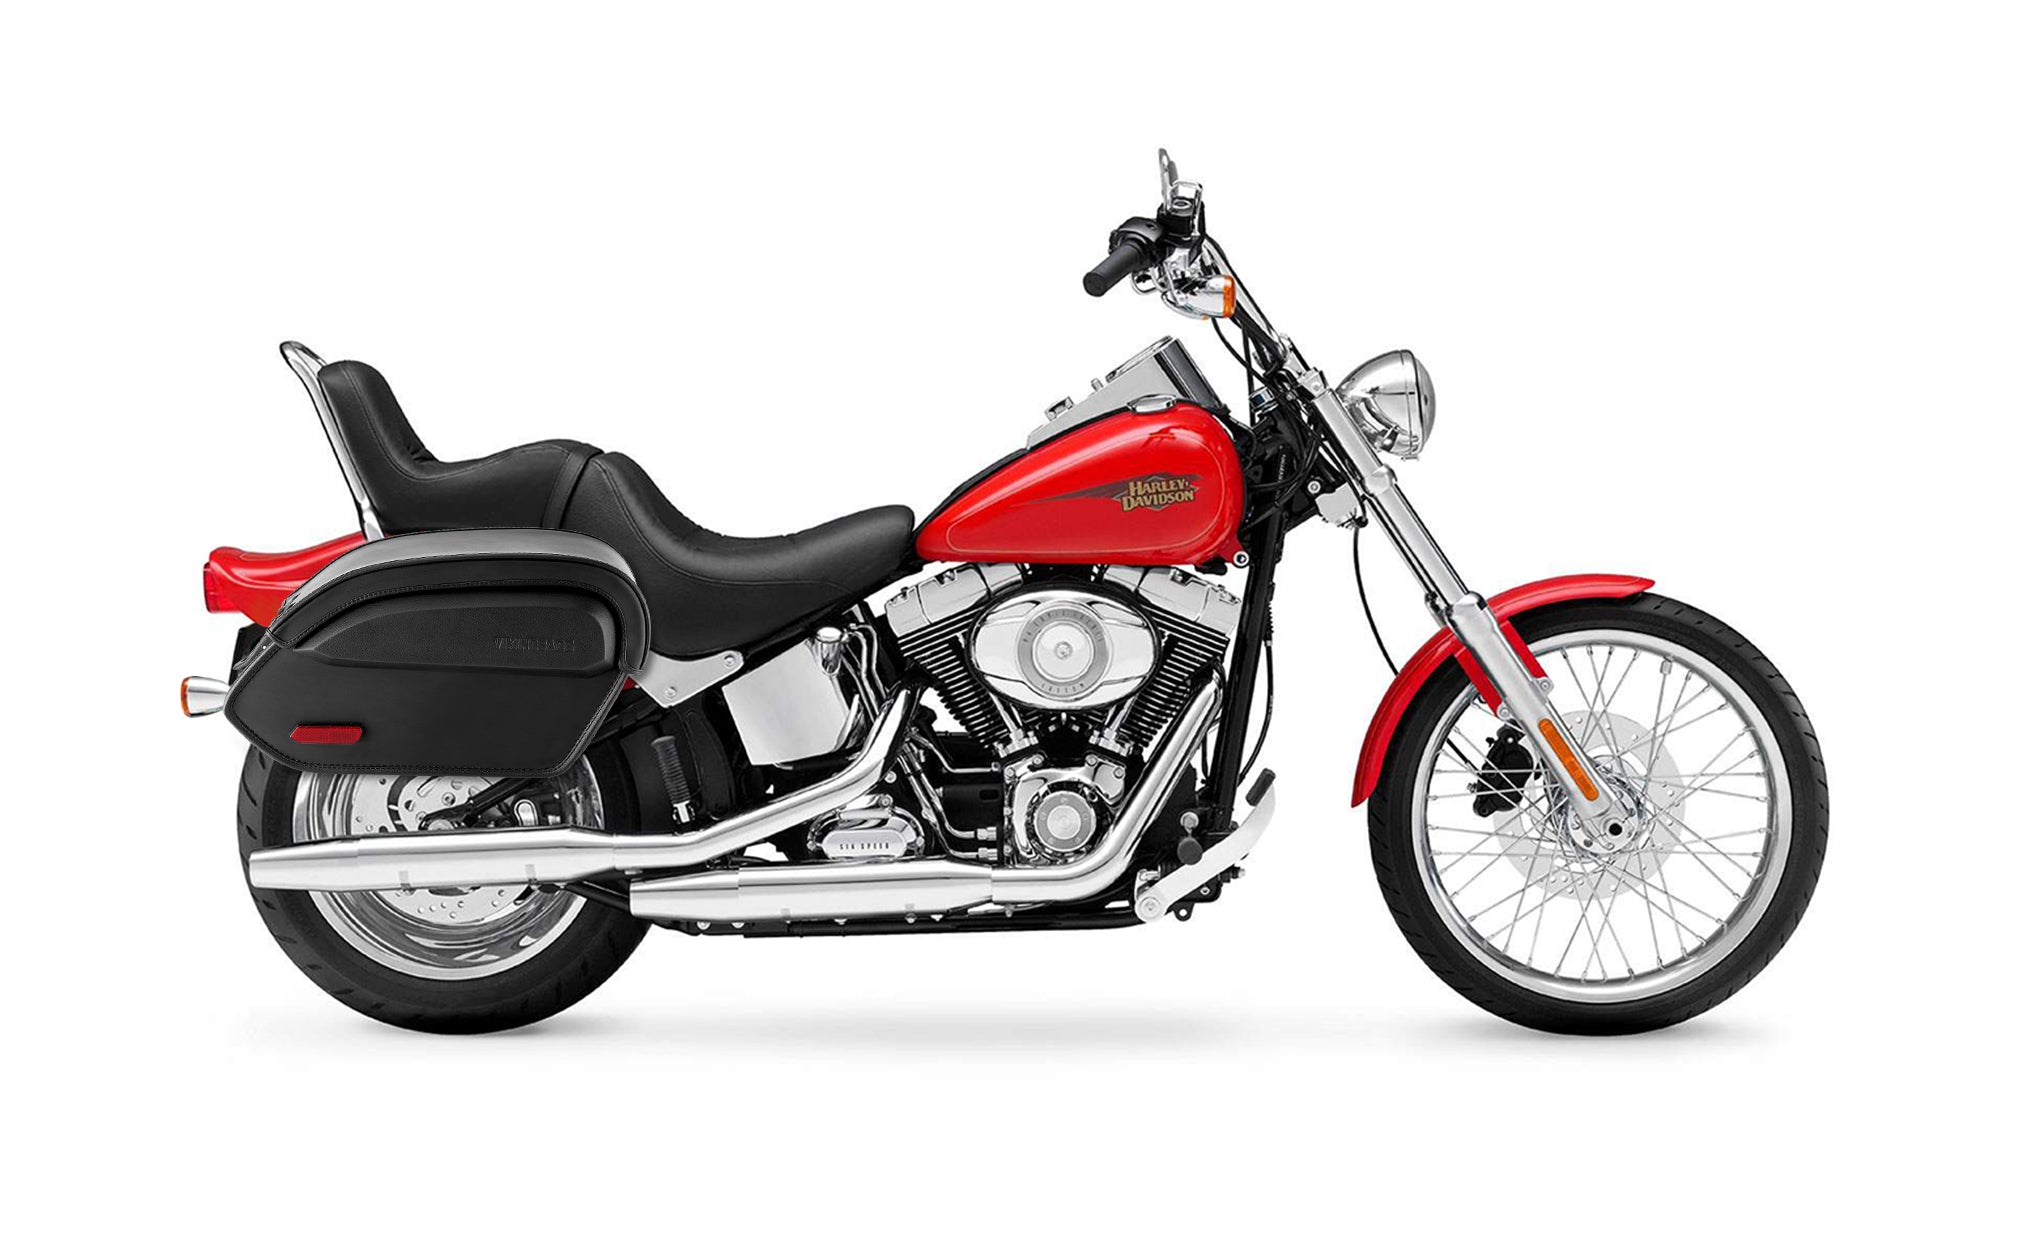 Viking Aviator Large Leather Motorcycle Saddlebags For Harley Softail Custom Fxstc on Bike Photo @expand